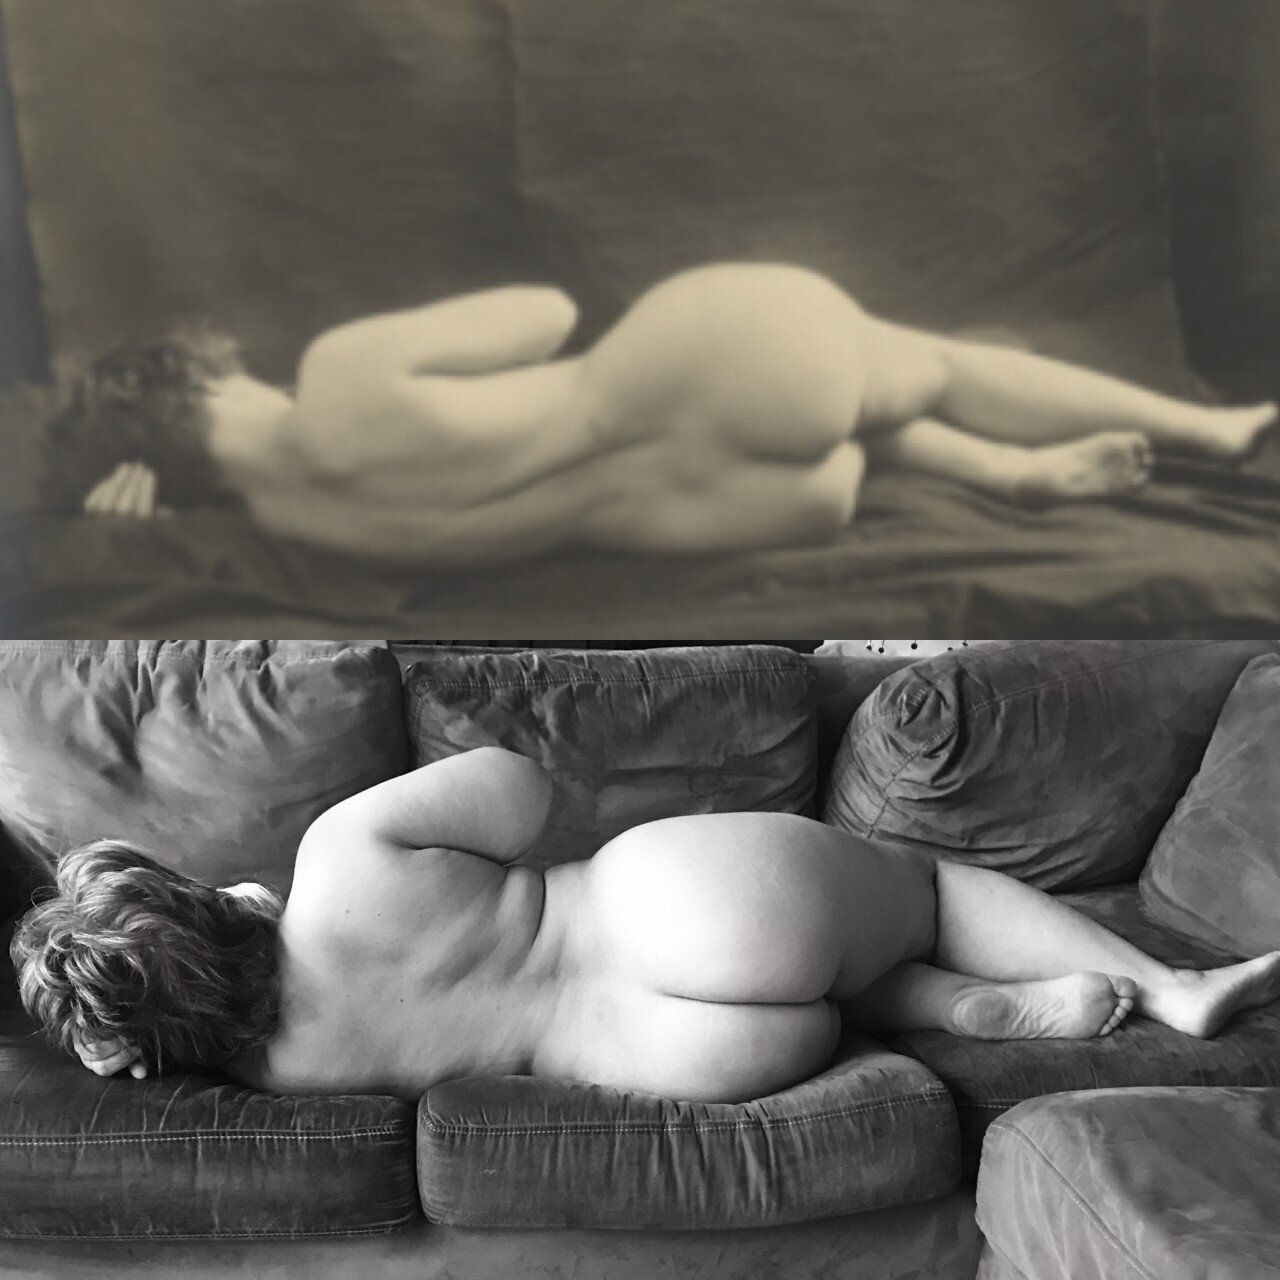 Reclining Nude by Henri Le Folcalvez, French, c. 1910, silver gelatin print